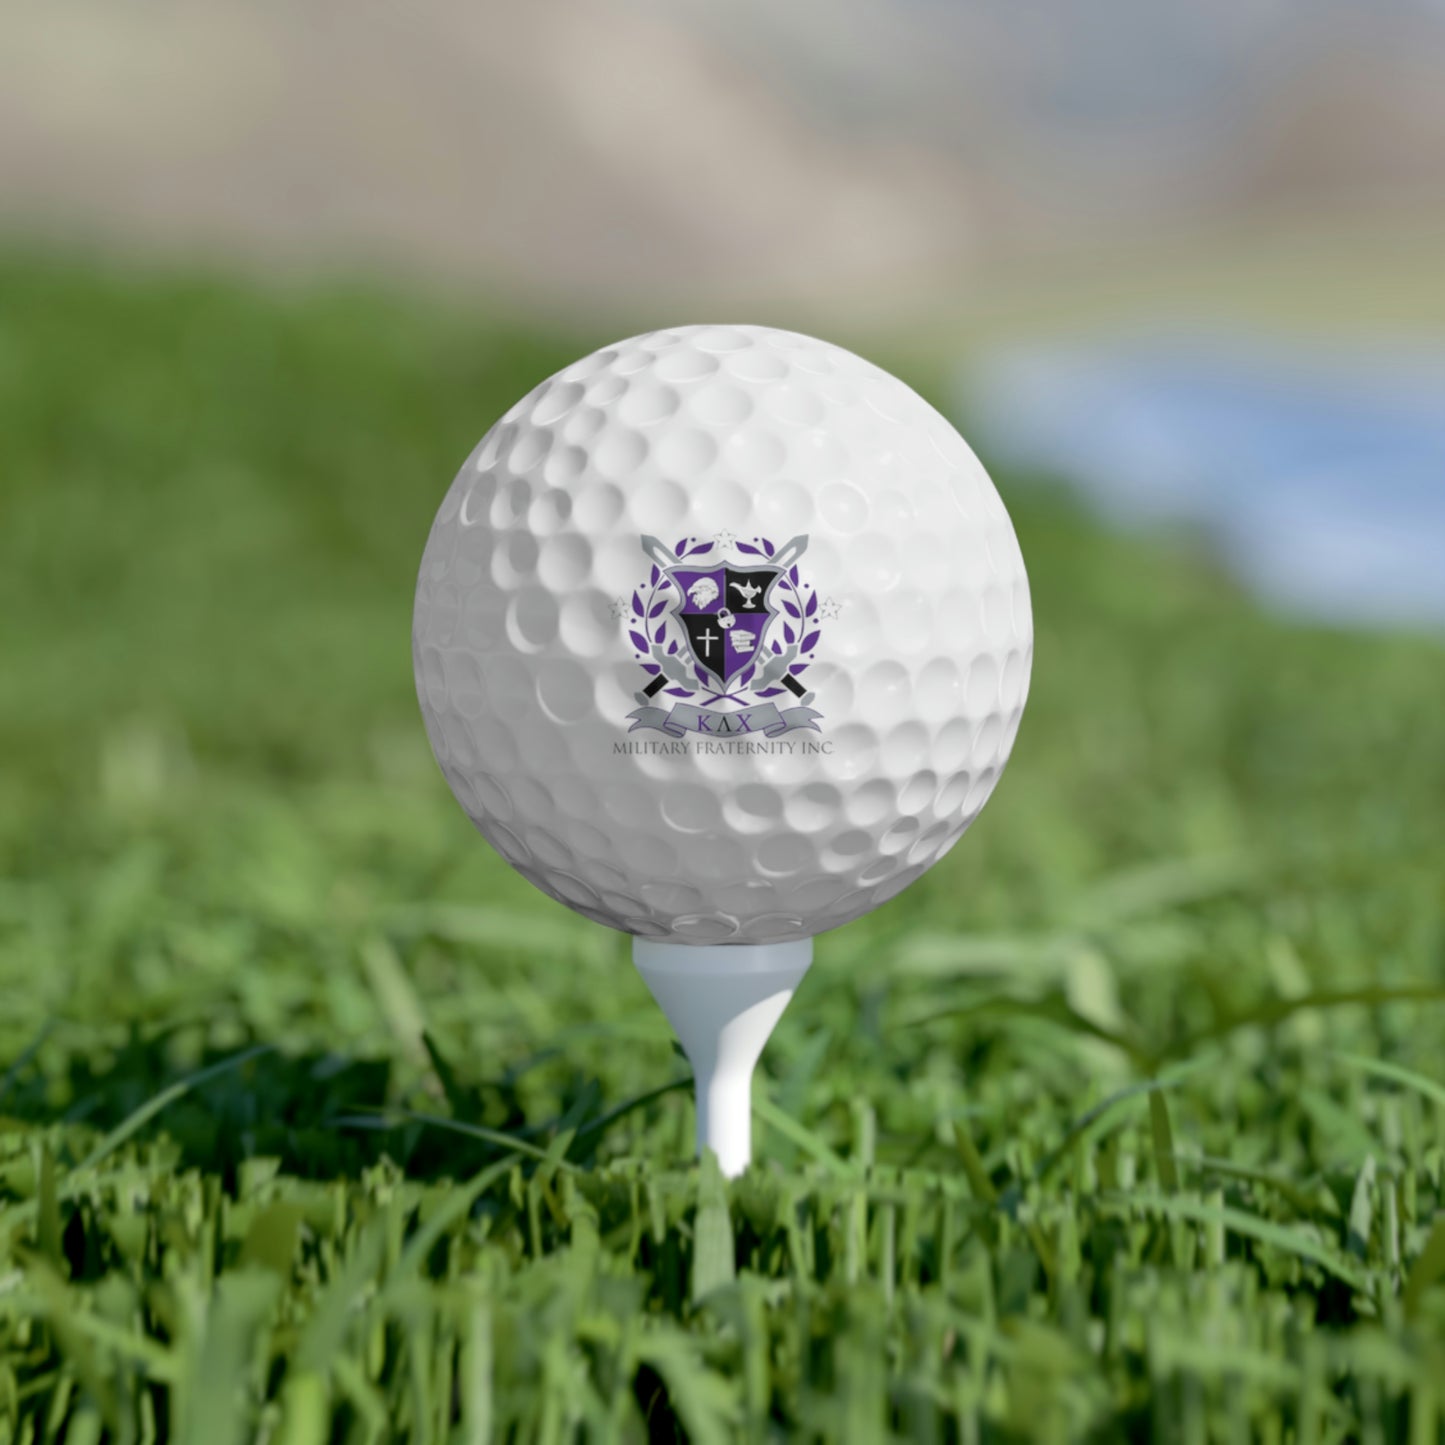 Kappa Lambda Chi (KLC) Golf Balls, 6pcs